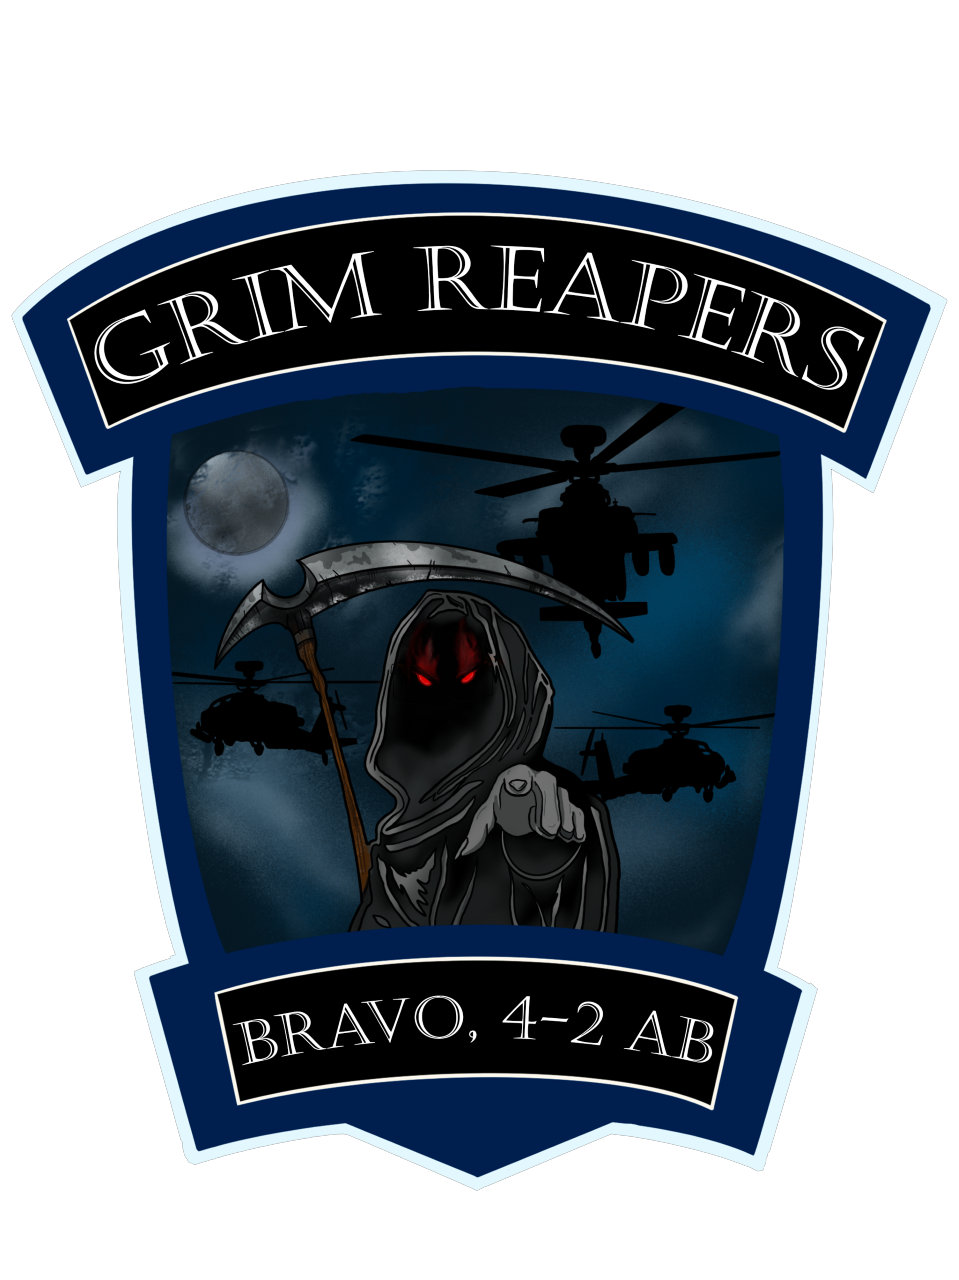 B 4-2 AB "Grim Reapers"